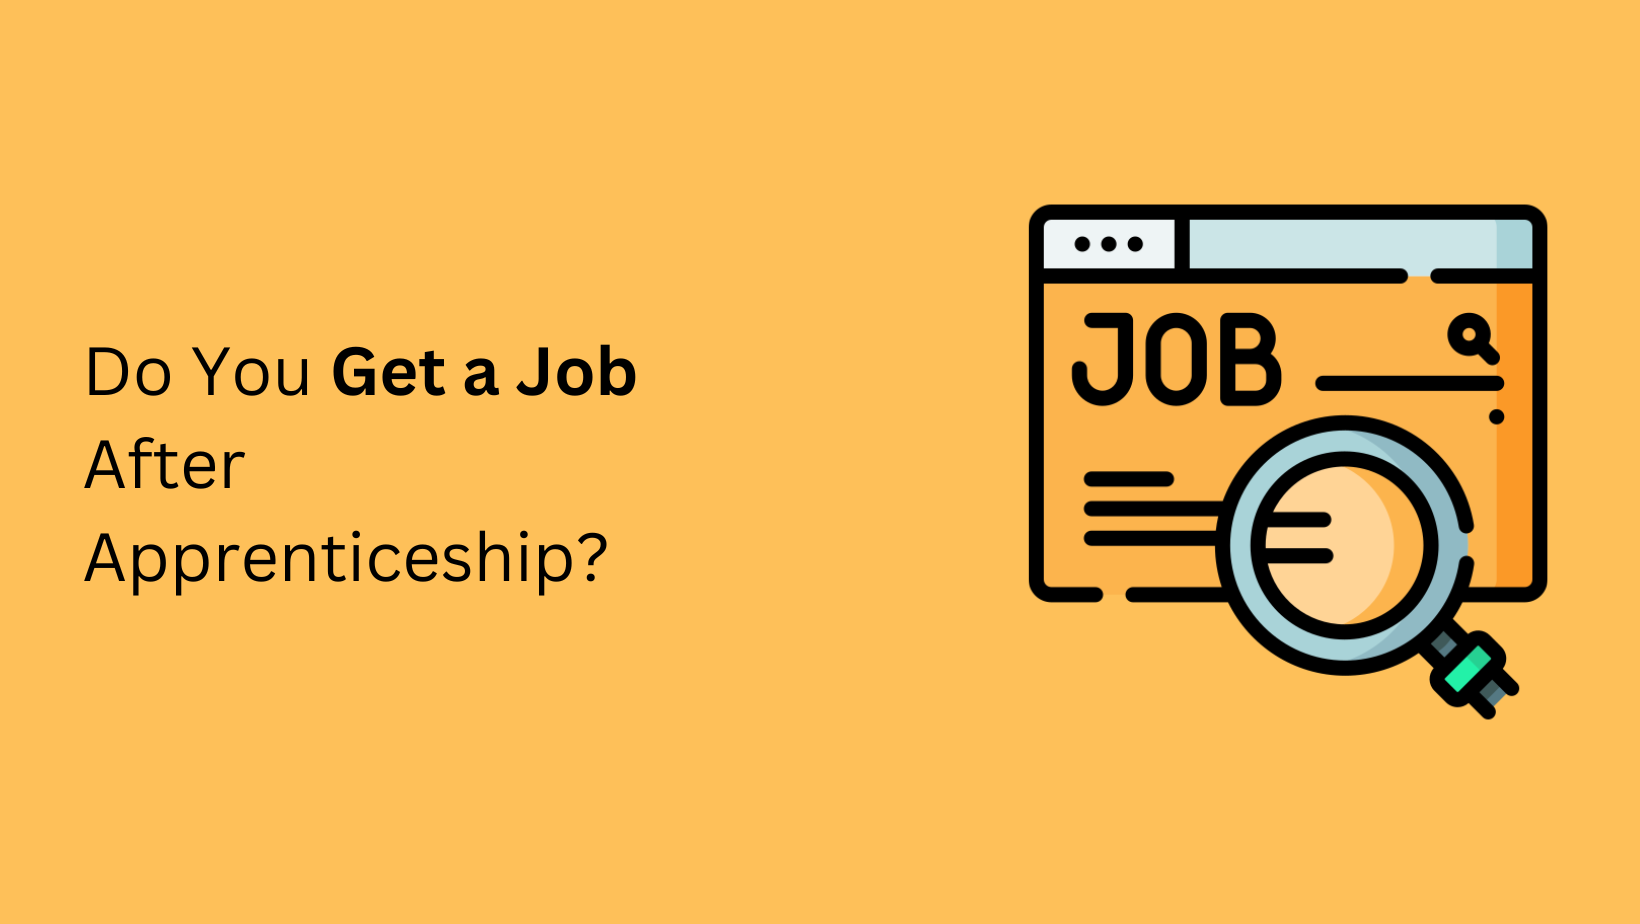 Do You Get a Job After Apprenticeship